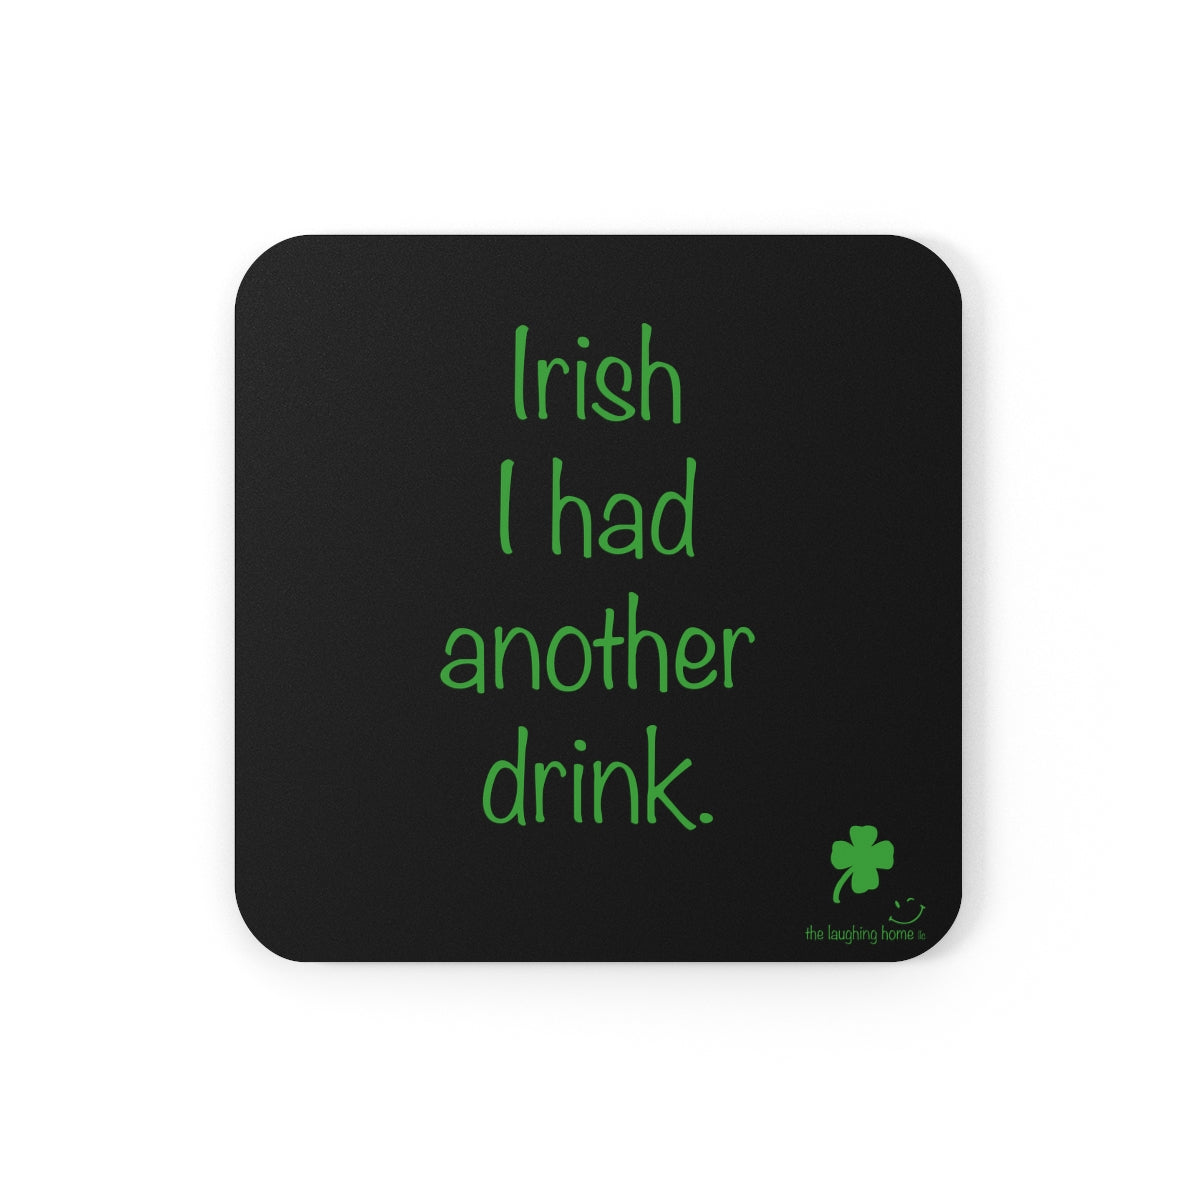 Irish I had another drink Corkwood Coaster Set of 4